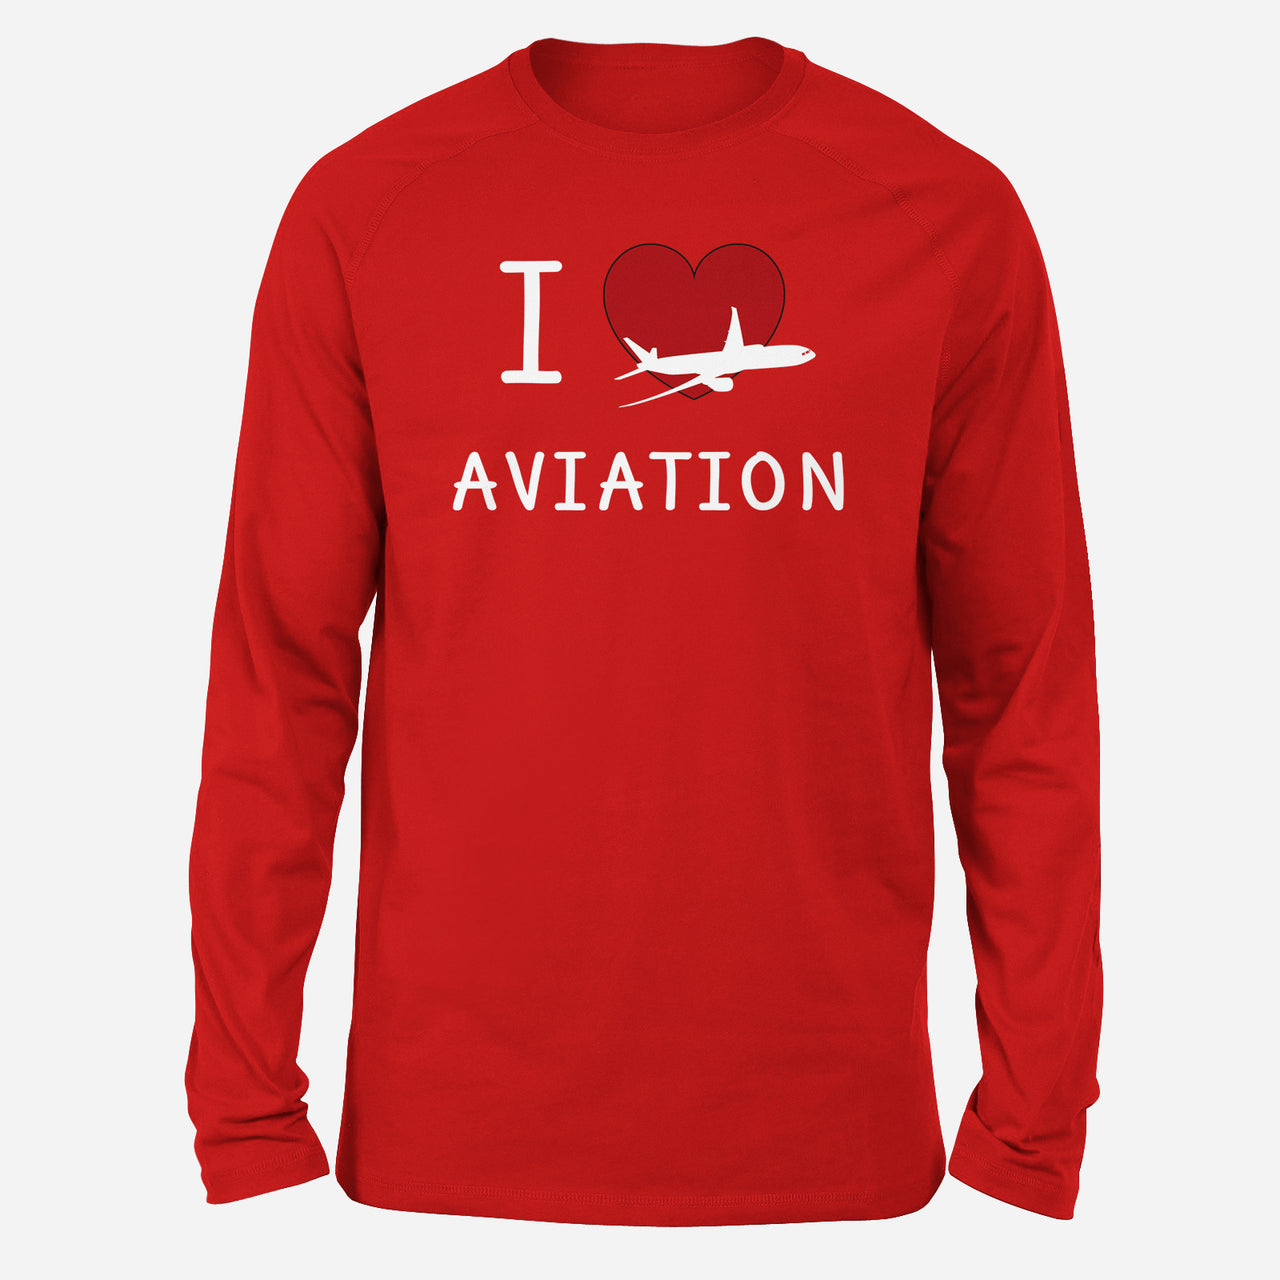 I Love Aviation Designed Long-Sleeve T-Shirts